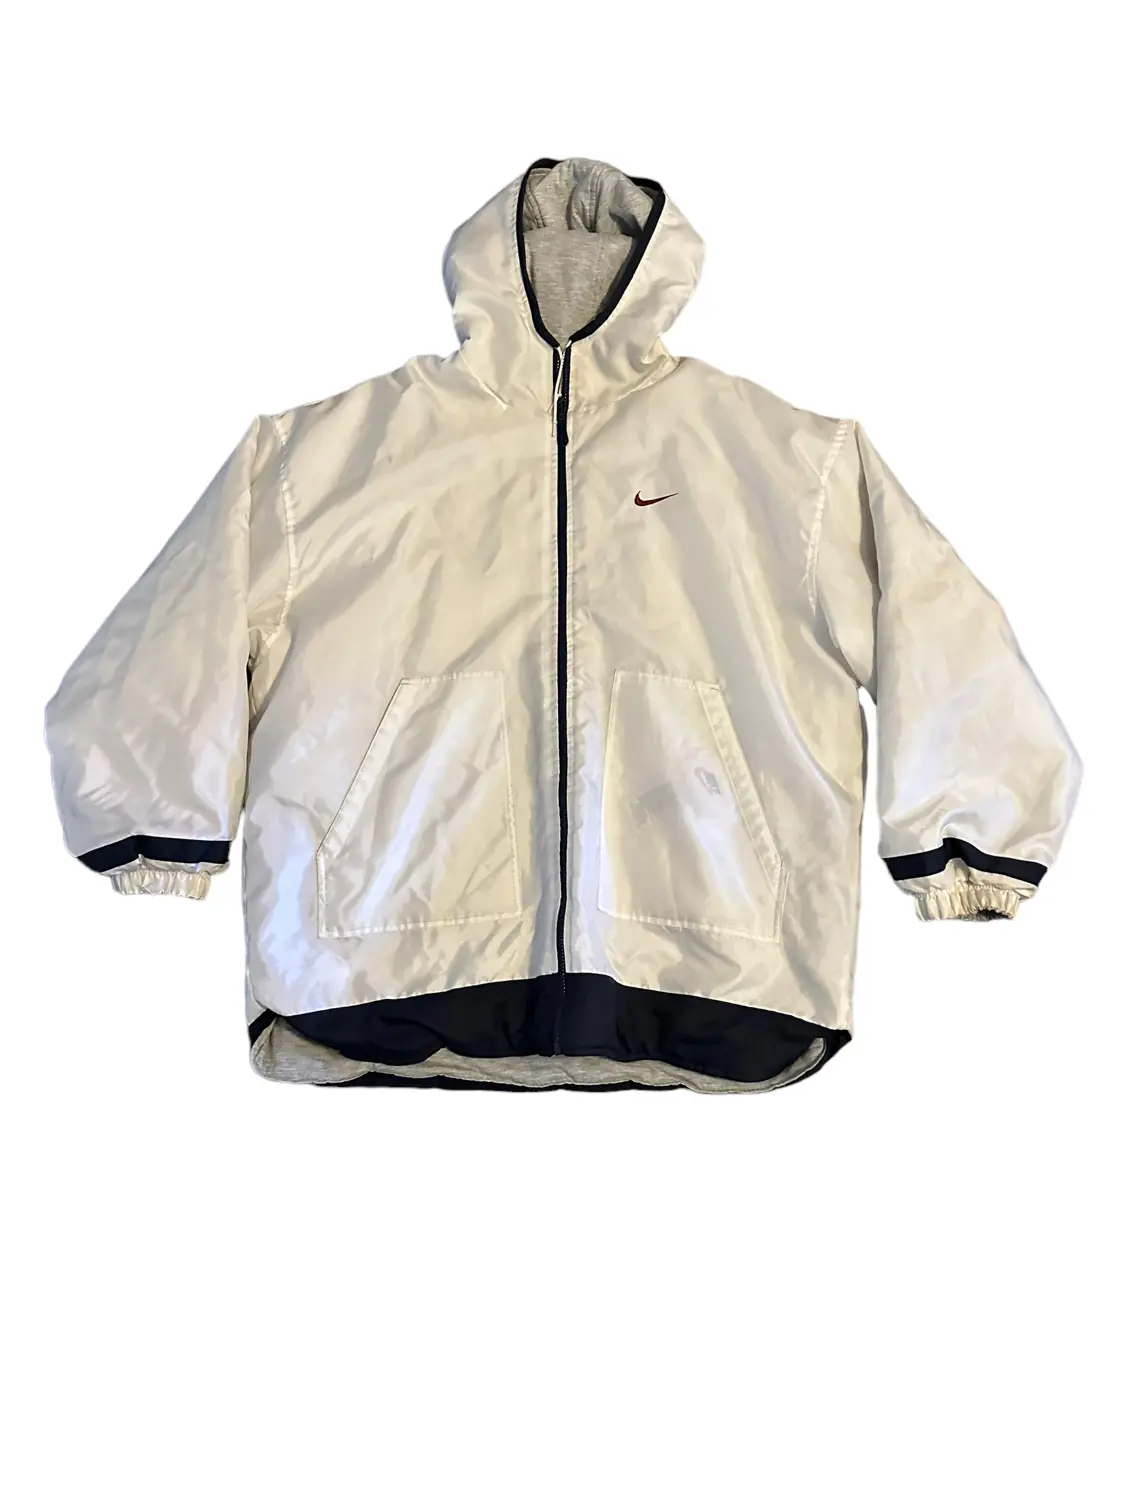 90s Nike reversible jacket